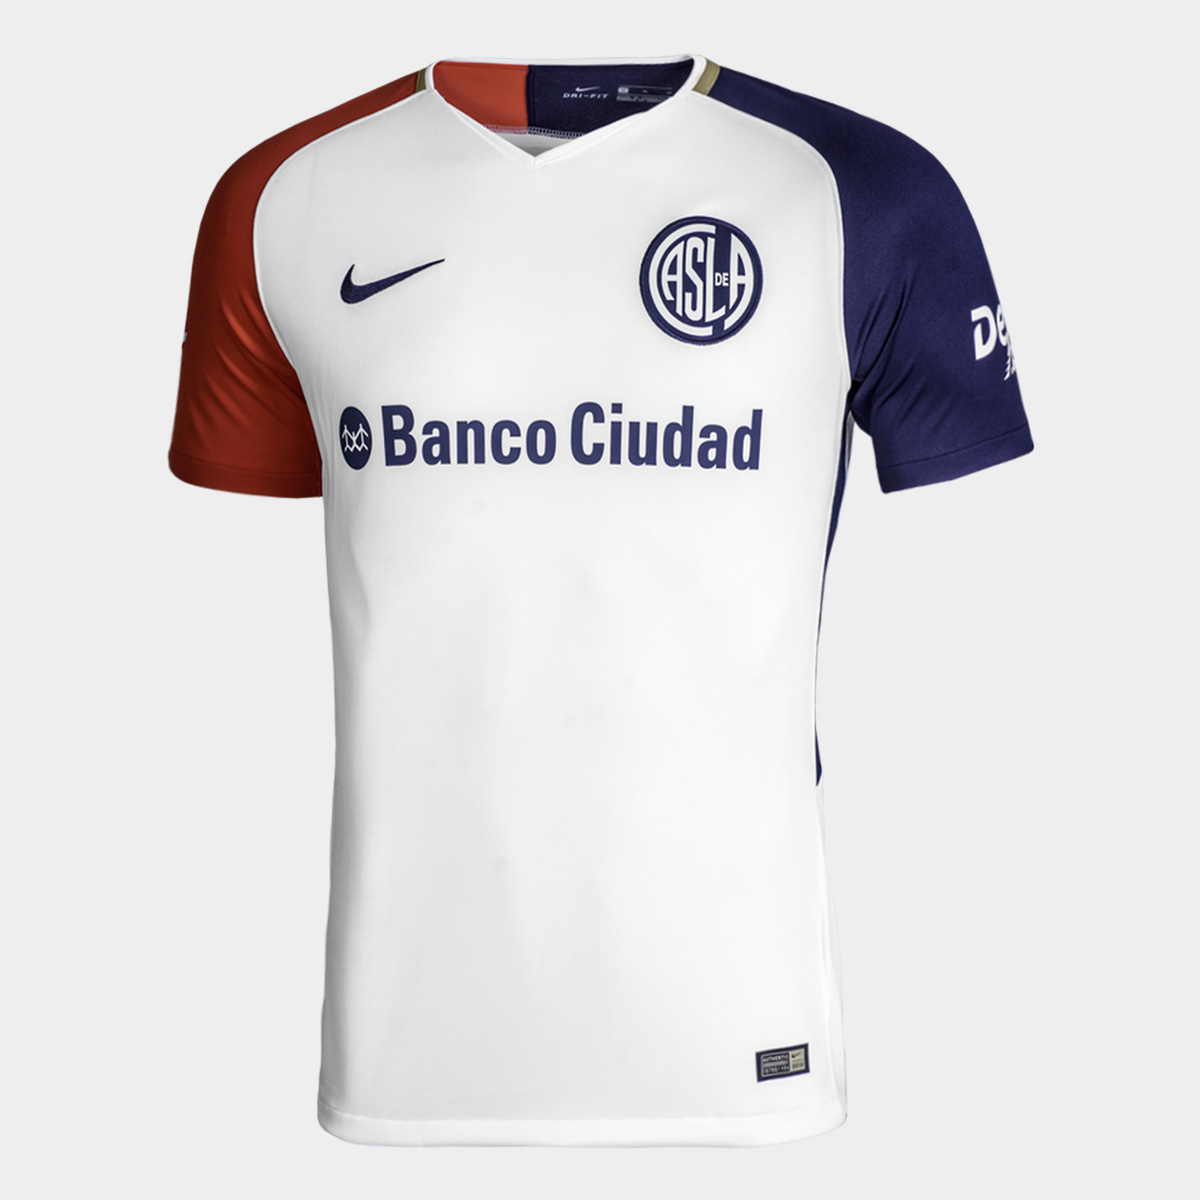 San Lorenzo 2018 Nike Away Kit | 17/18 Kits | Football shirt blog